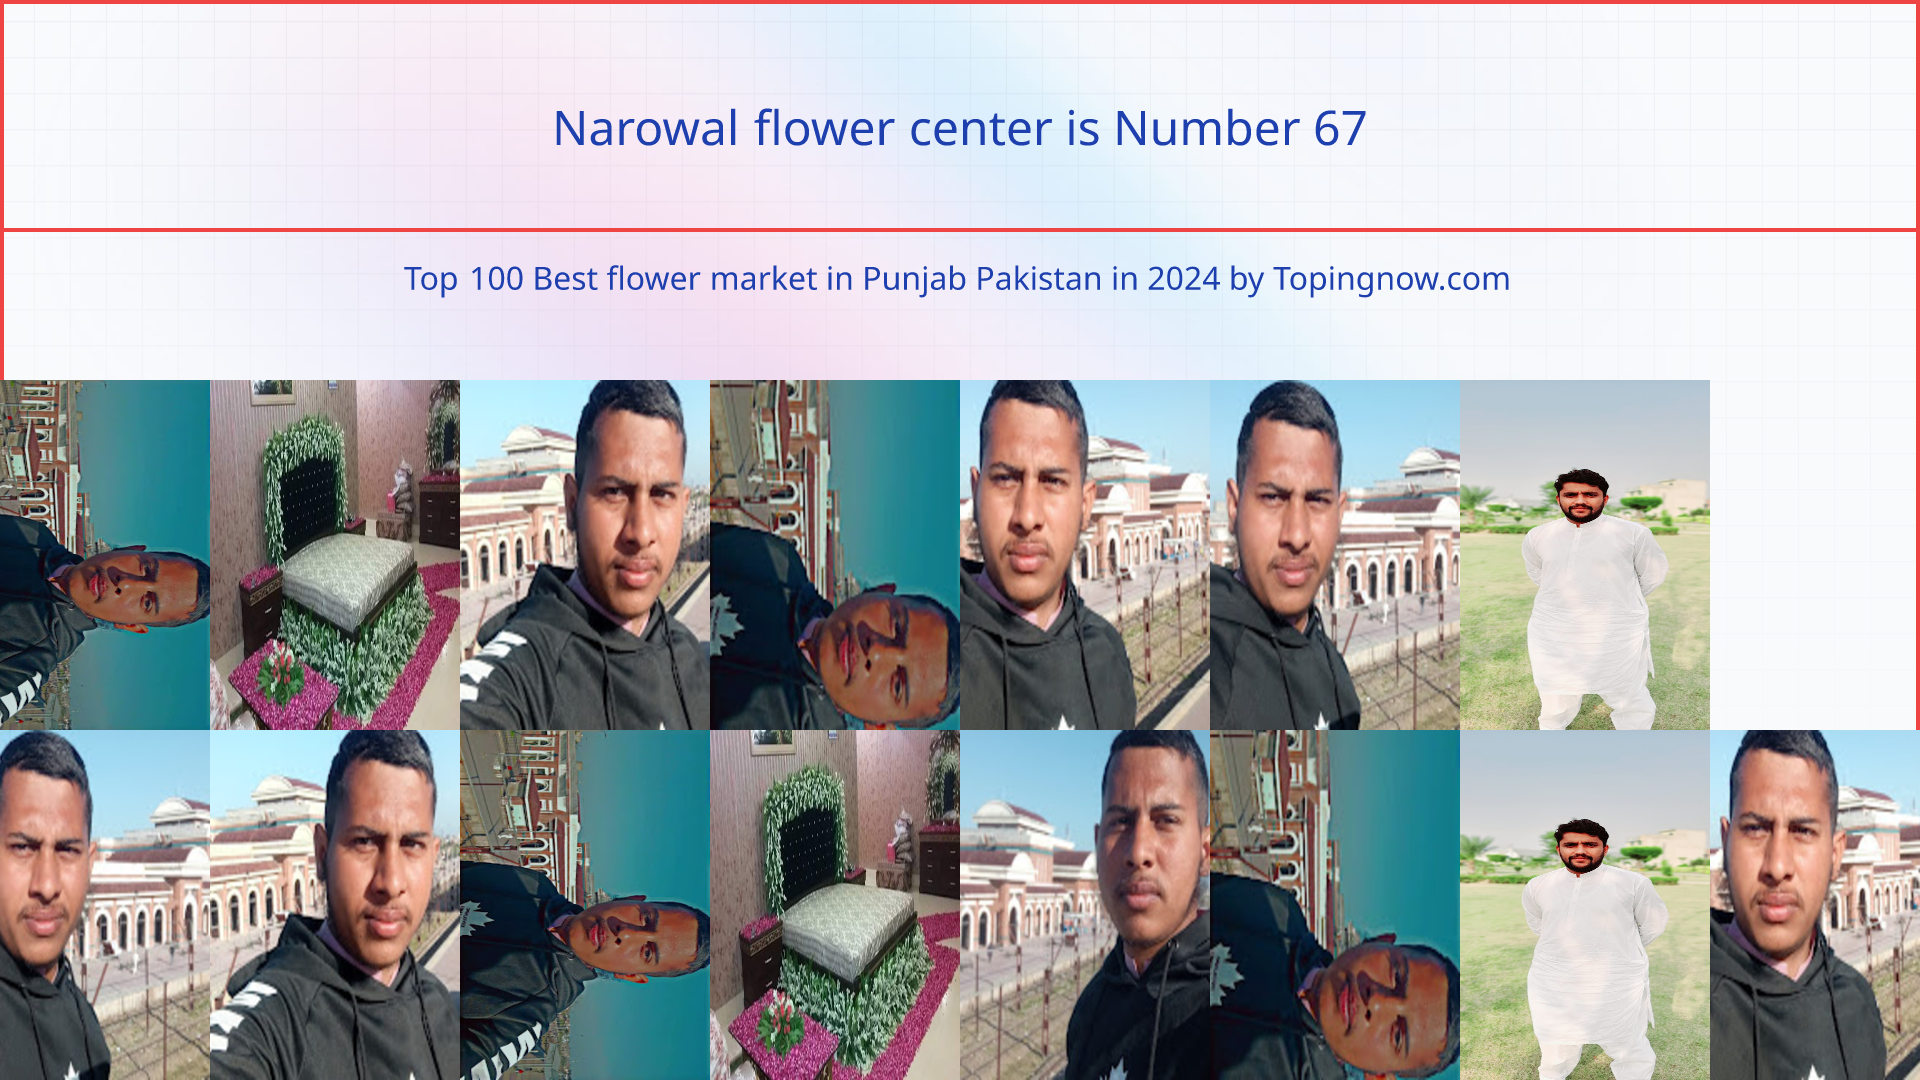 Narowal flower center: Top 100 Best flower market in Punjab Pakistan in 2024